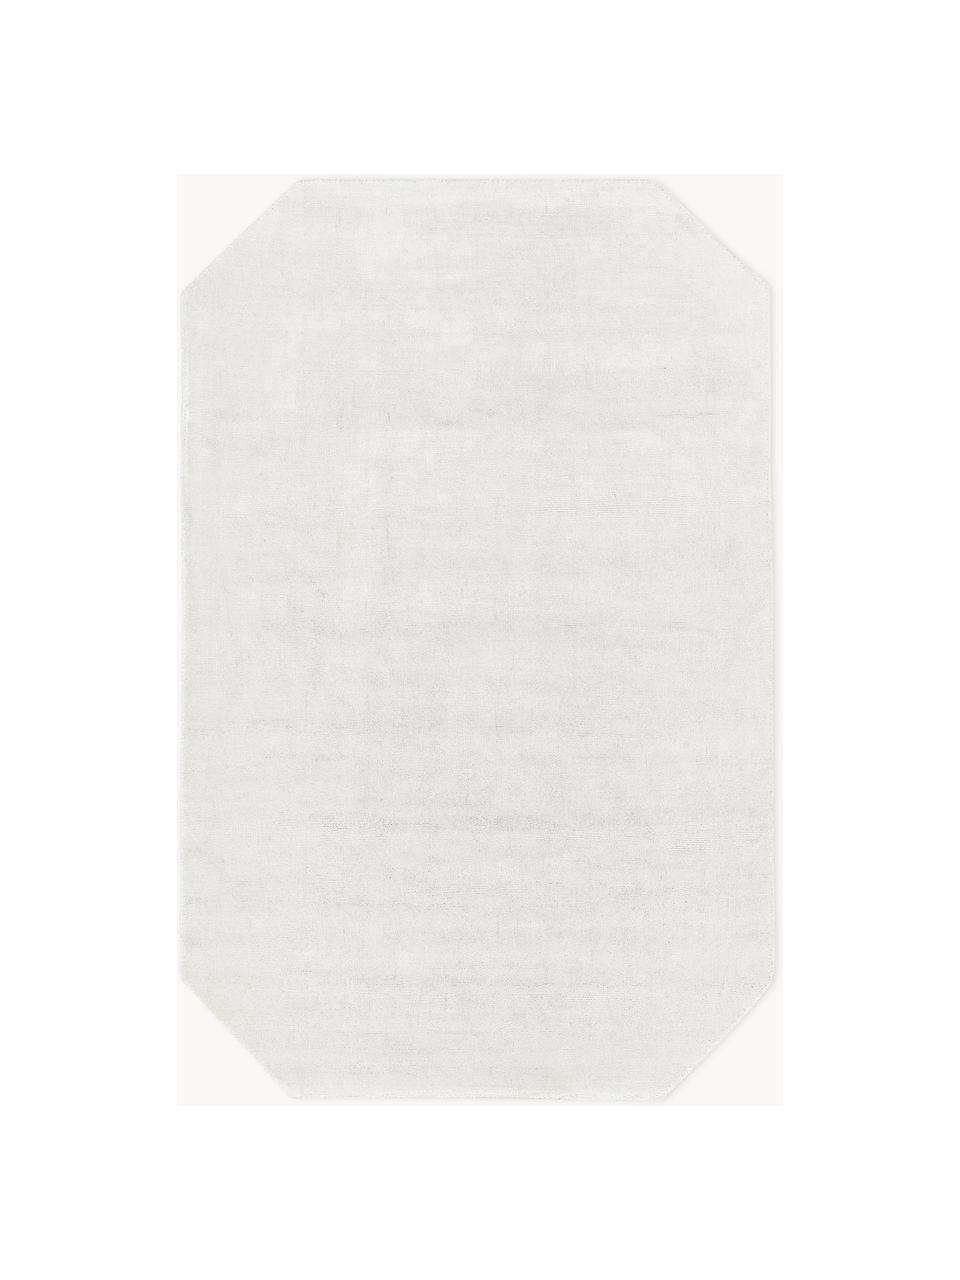 Tapis en viscose tissé main Jane Diamond, Blanc cassé, larg. 120 x long. 180 cm